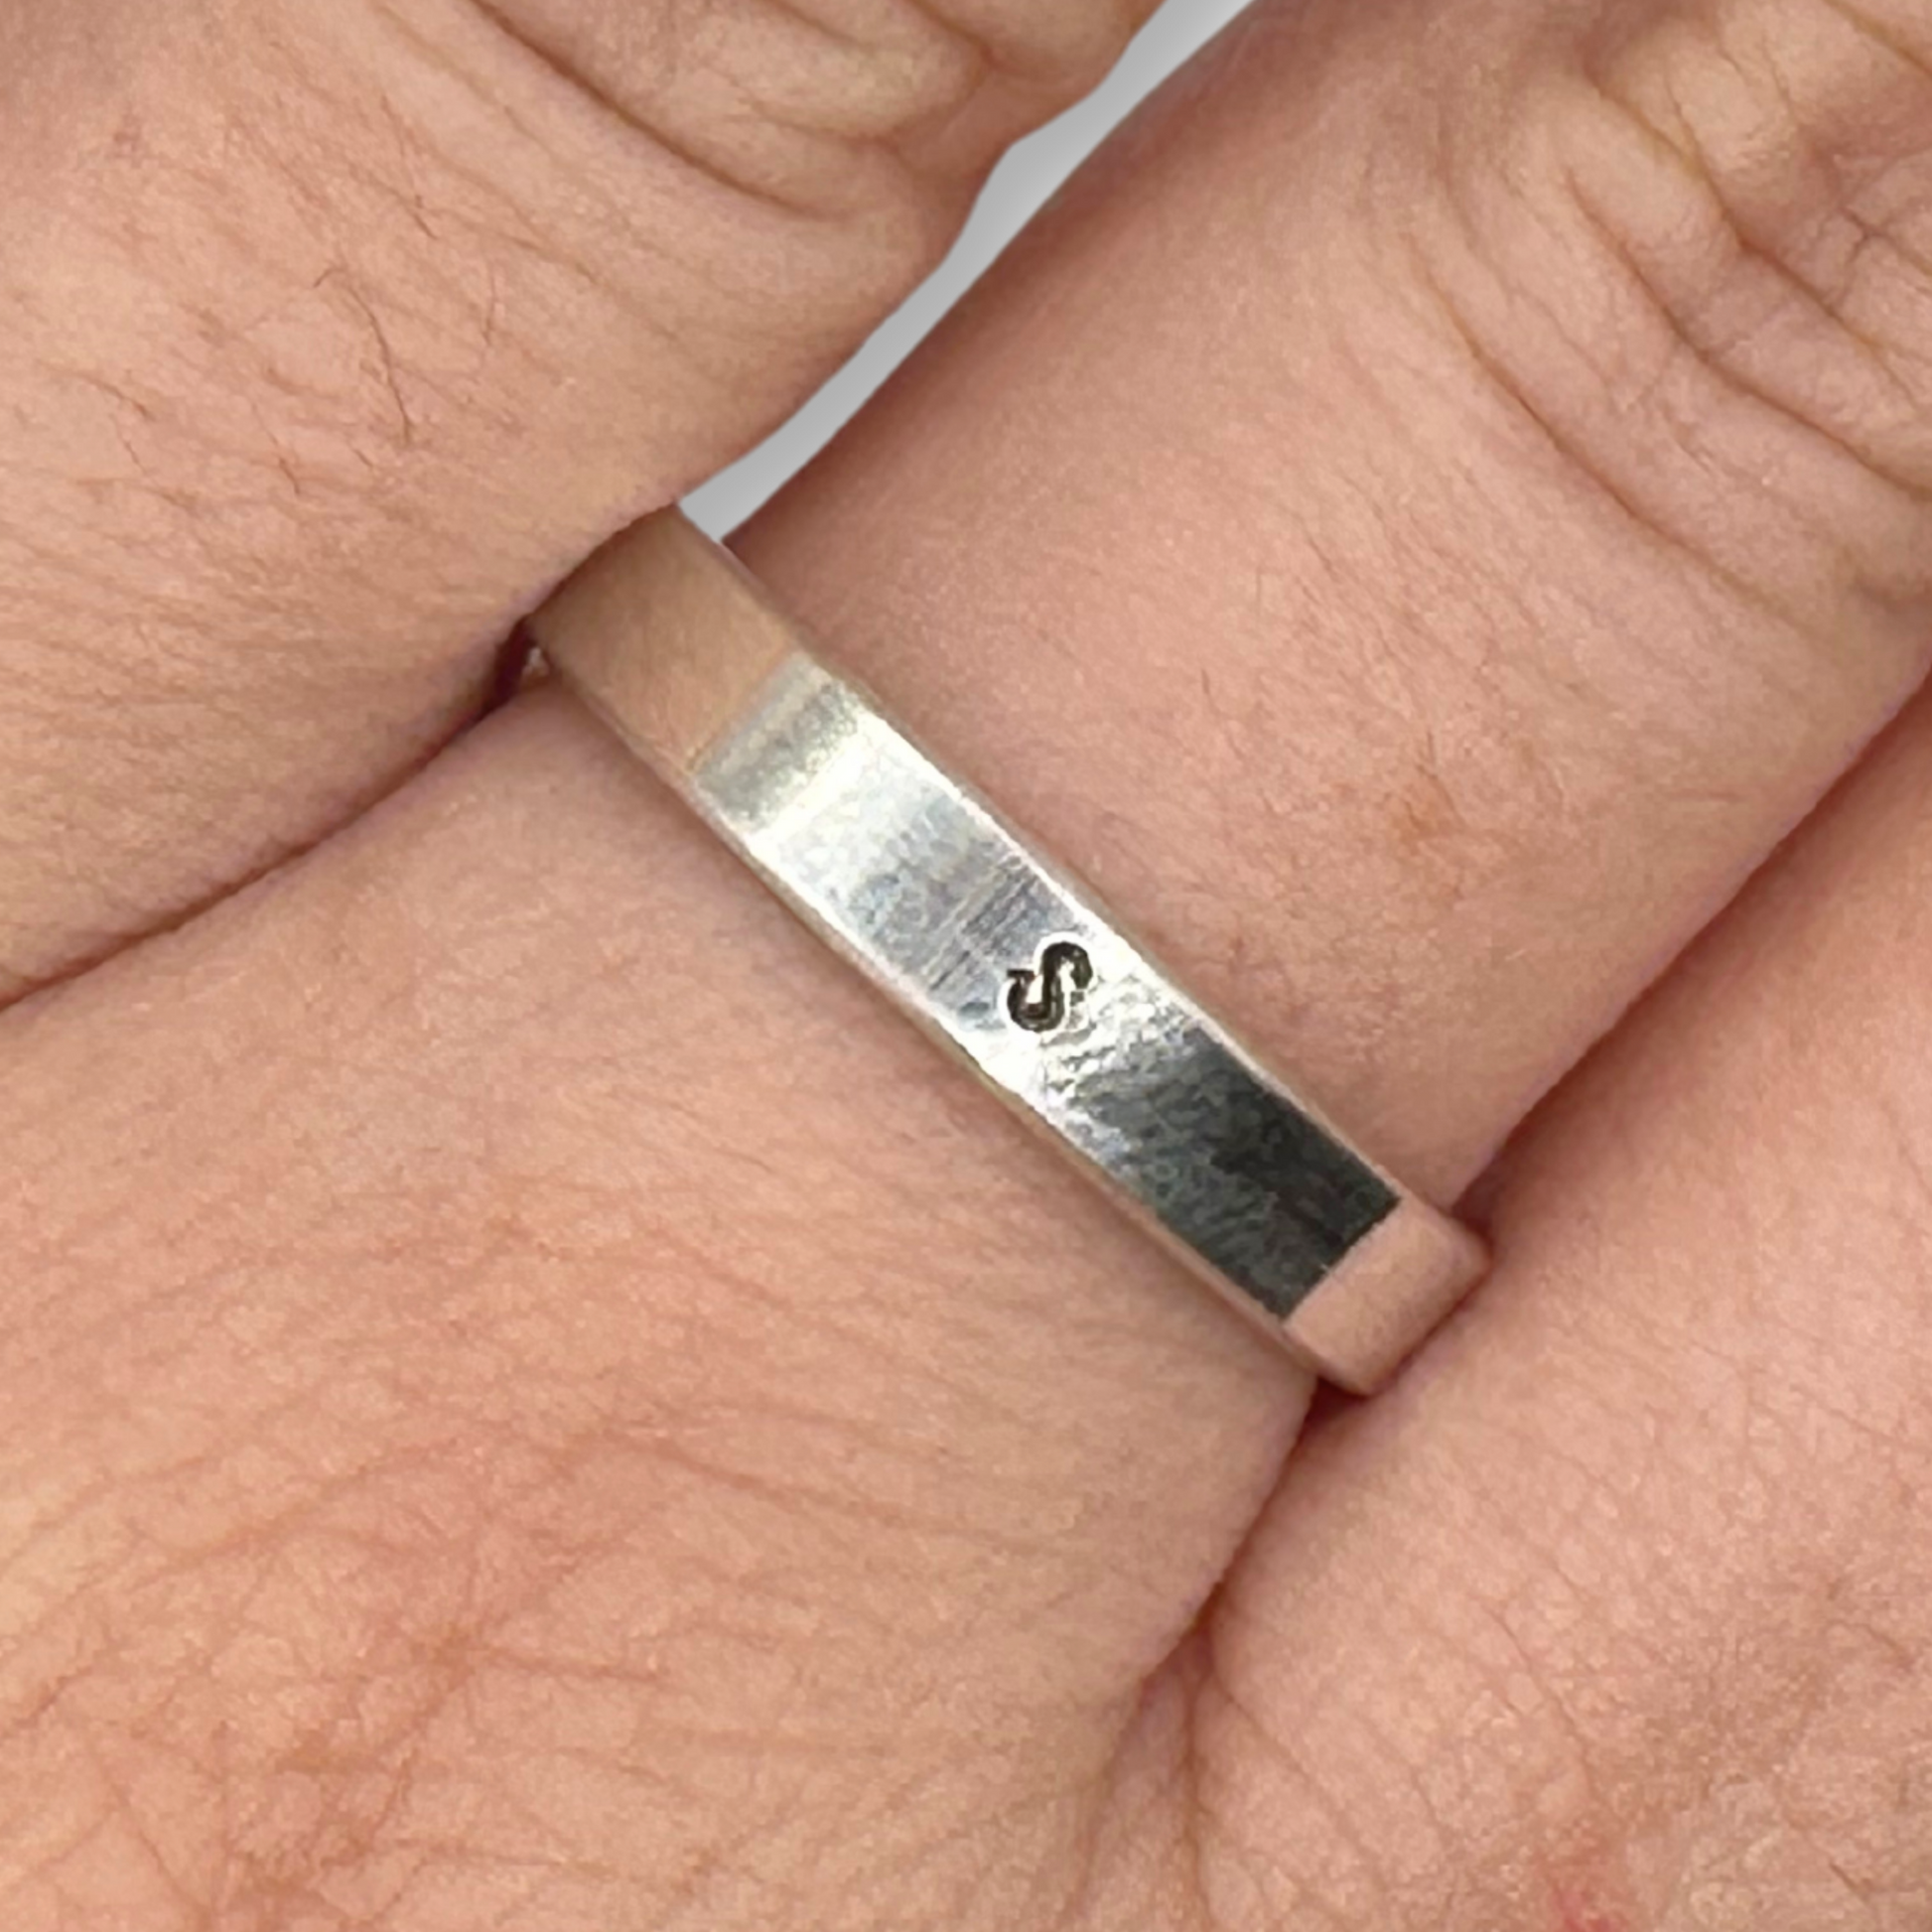 Custom Hand Stamped Ring